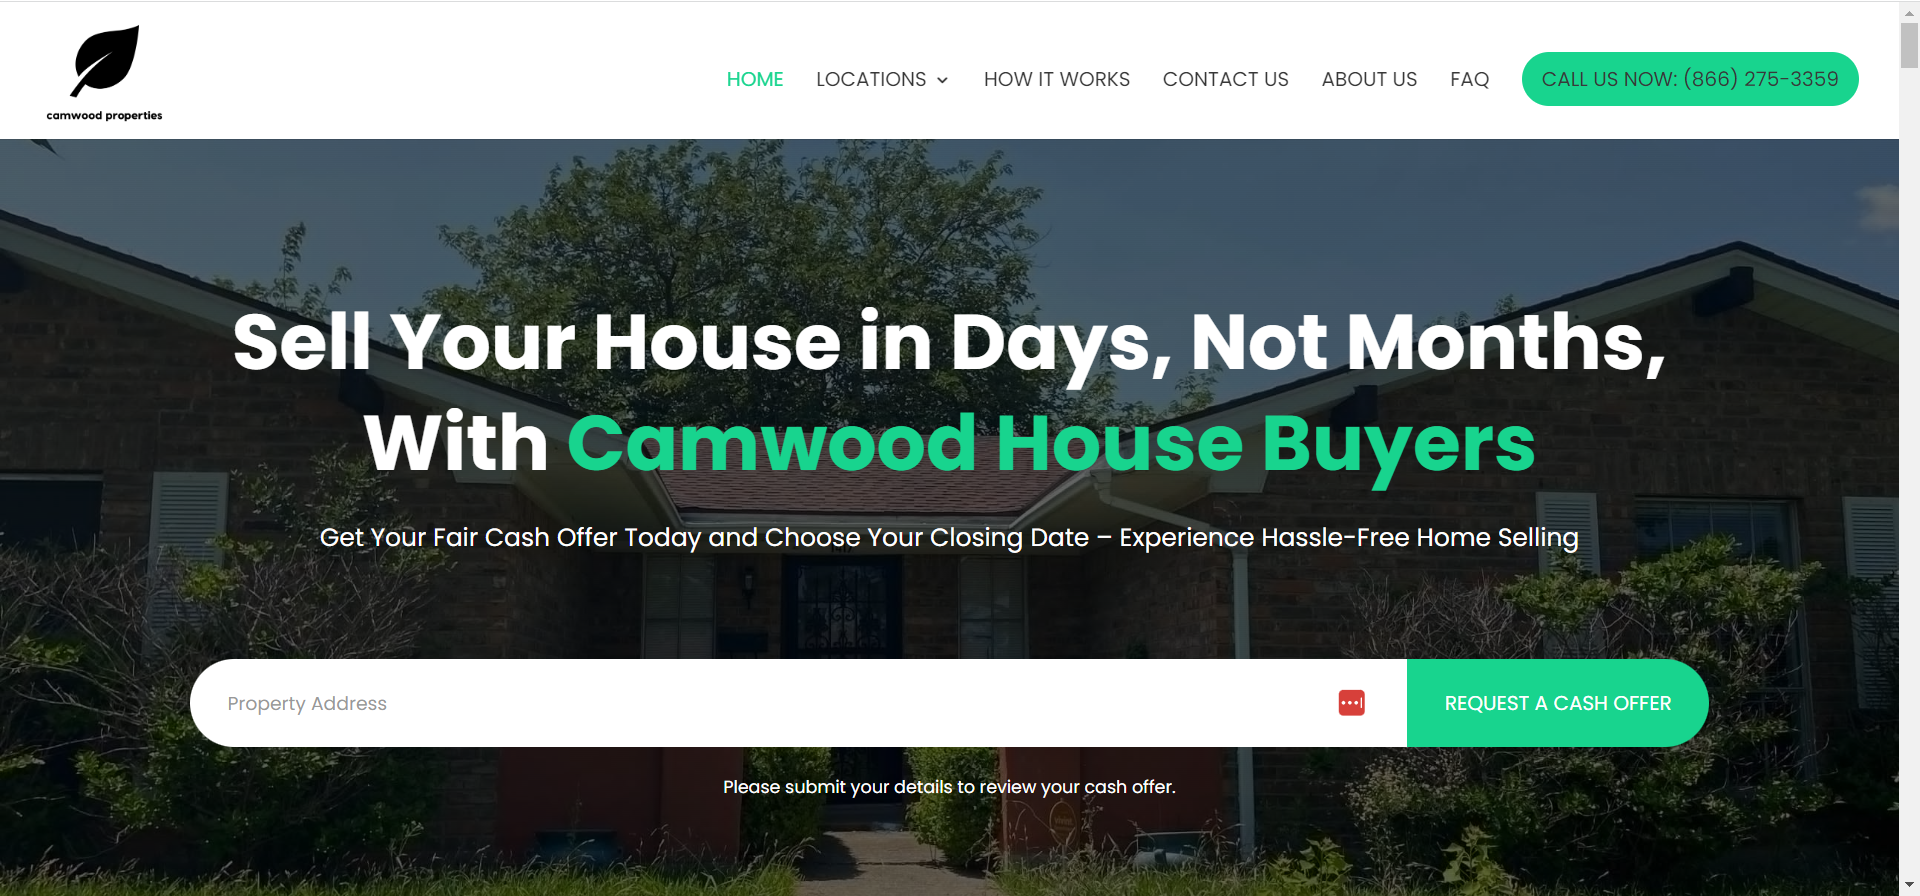 camwood house buyers seo